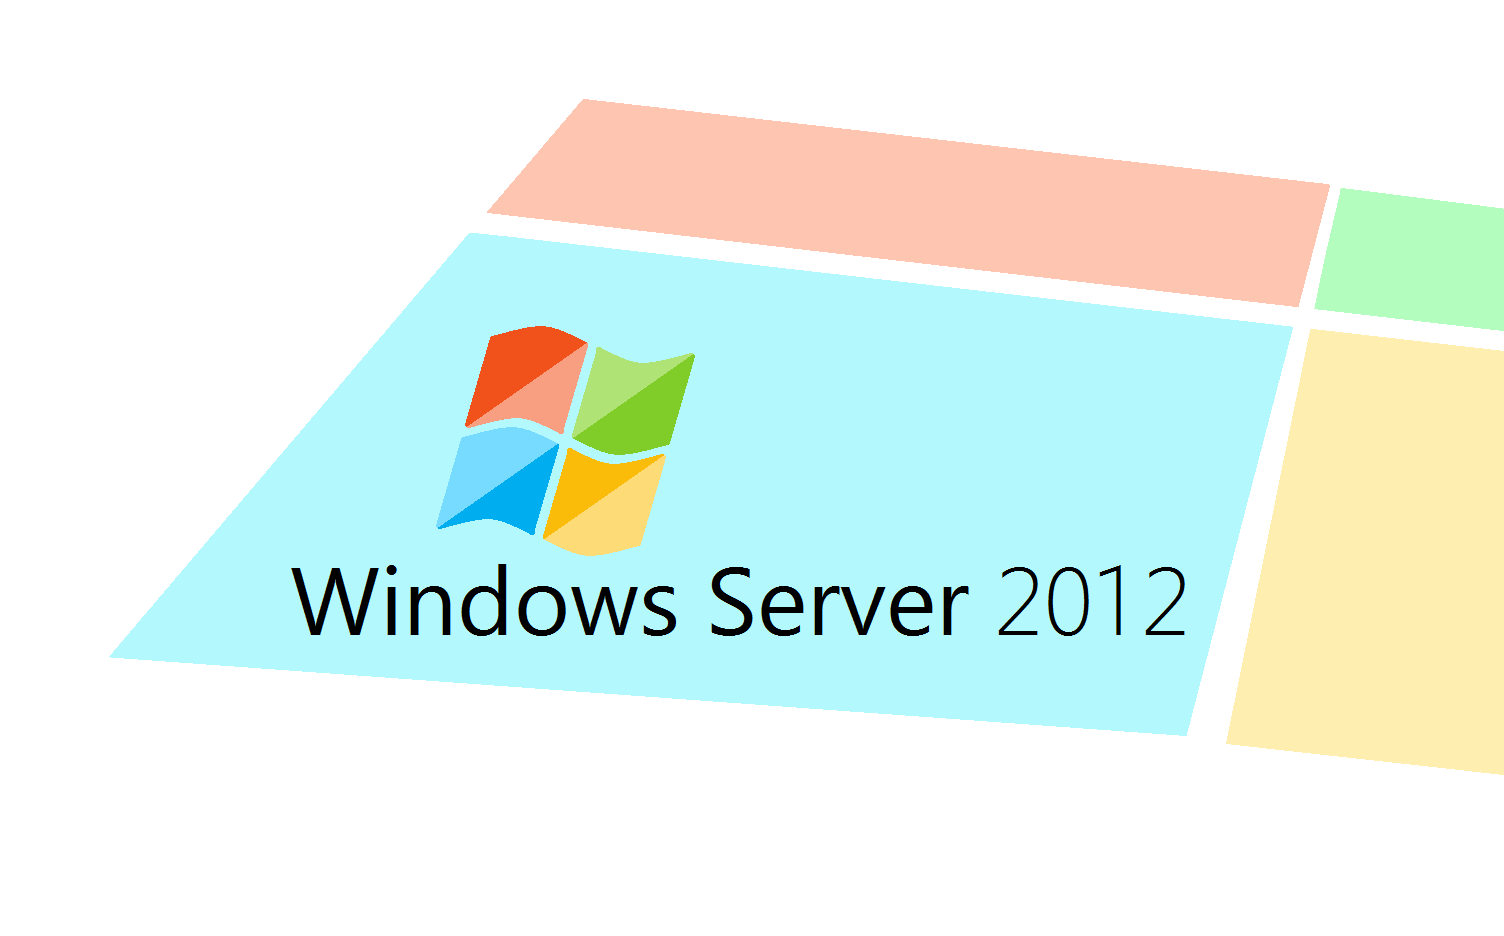 Windows Server 2012 Logo - Logos images Windows Server 2012 Logo HD wallpaper and background ...